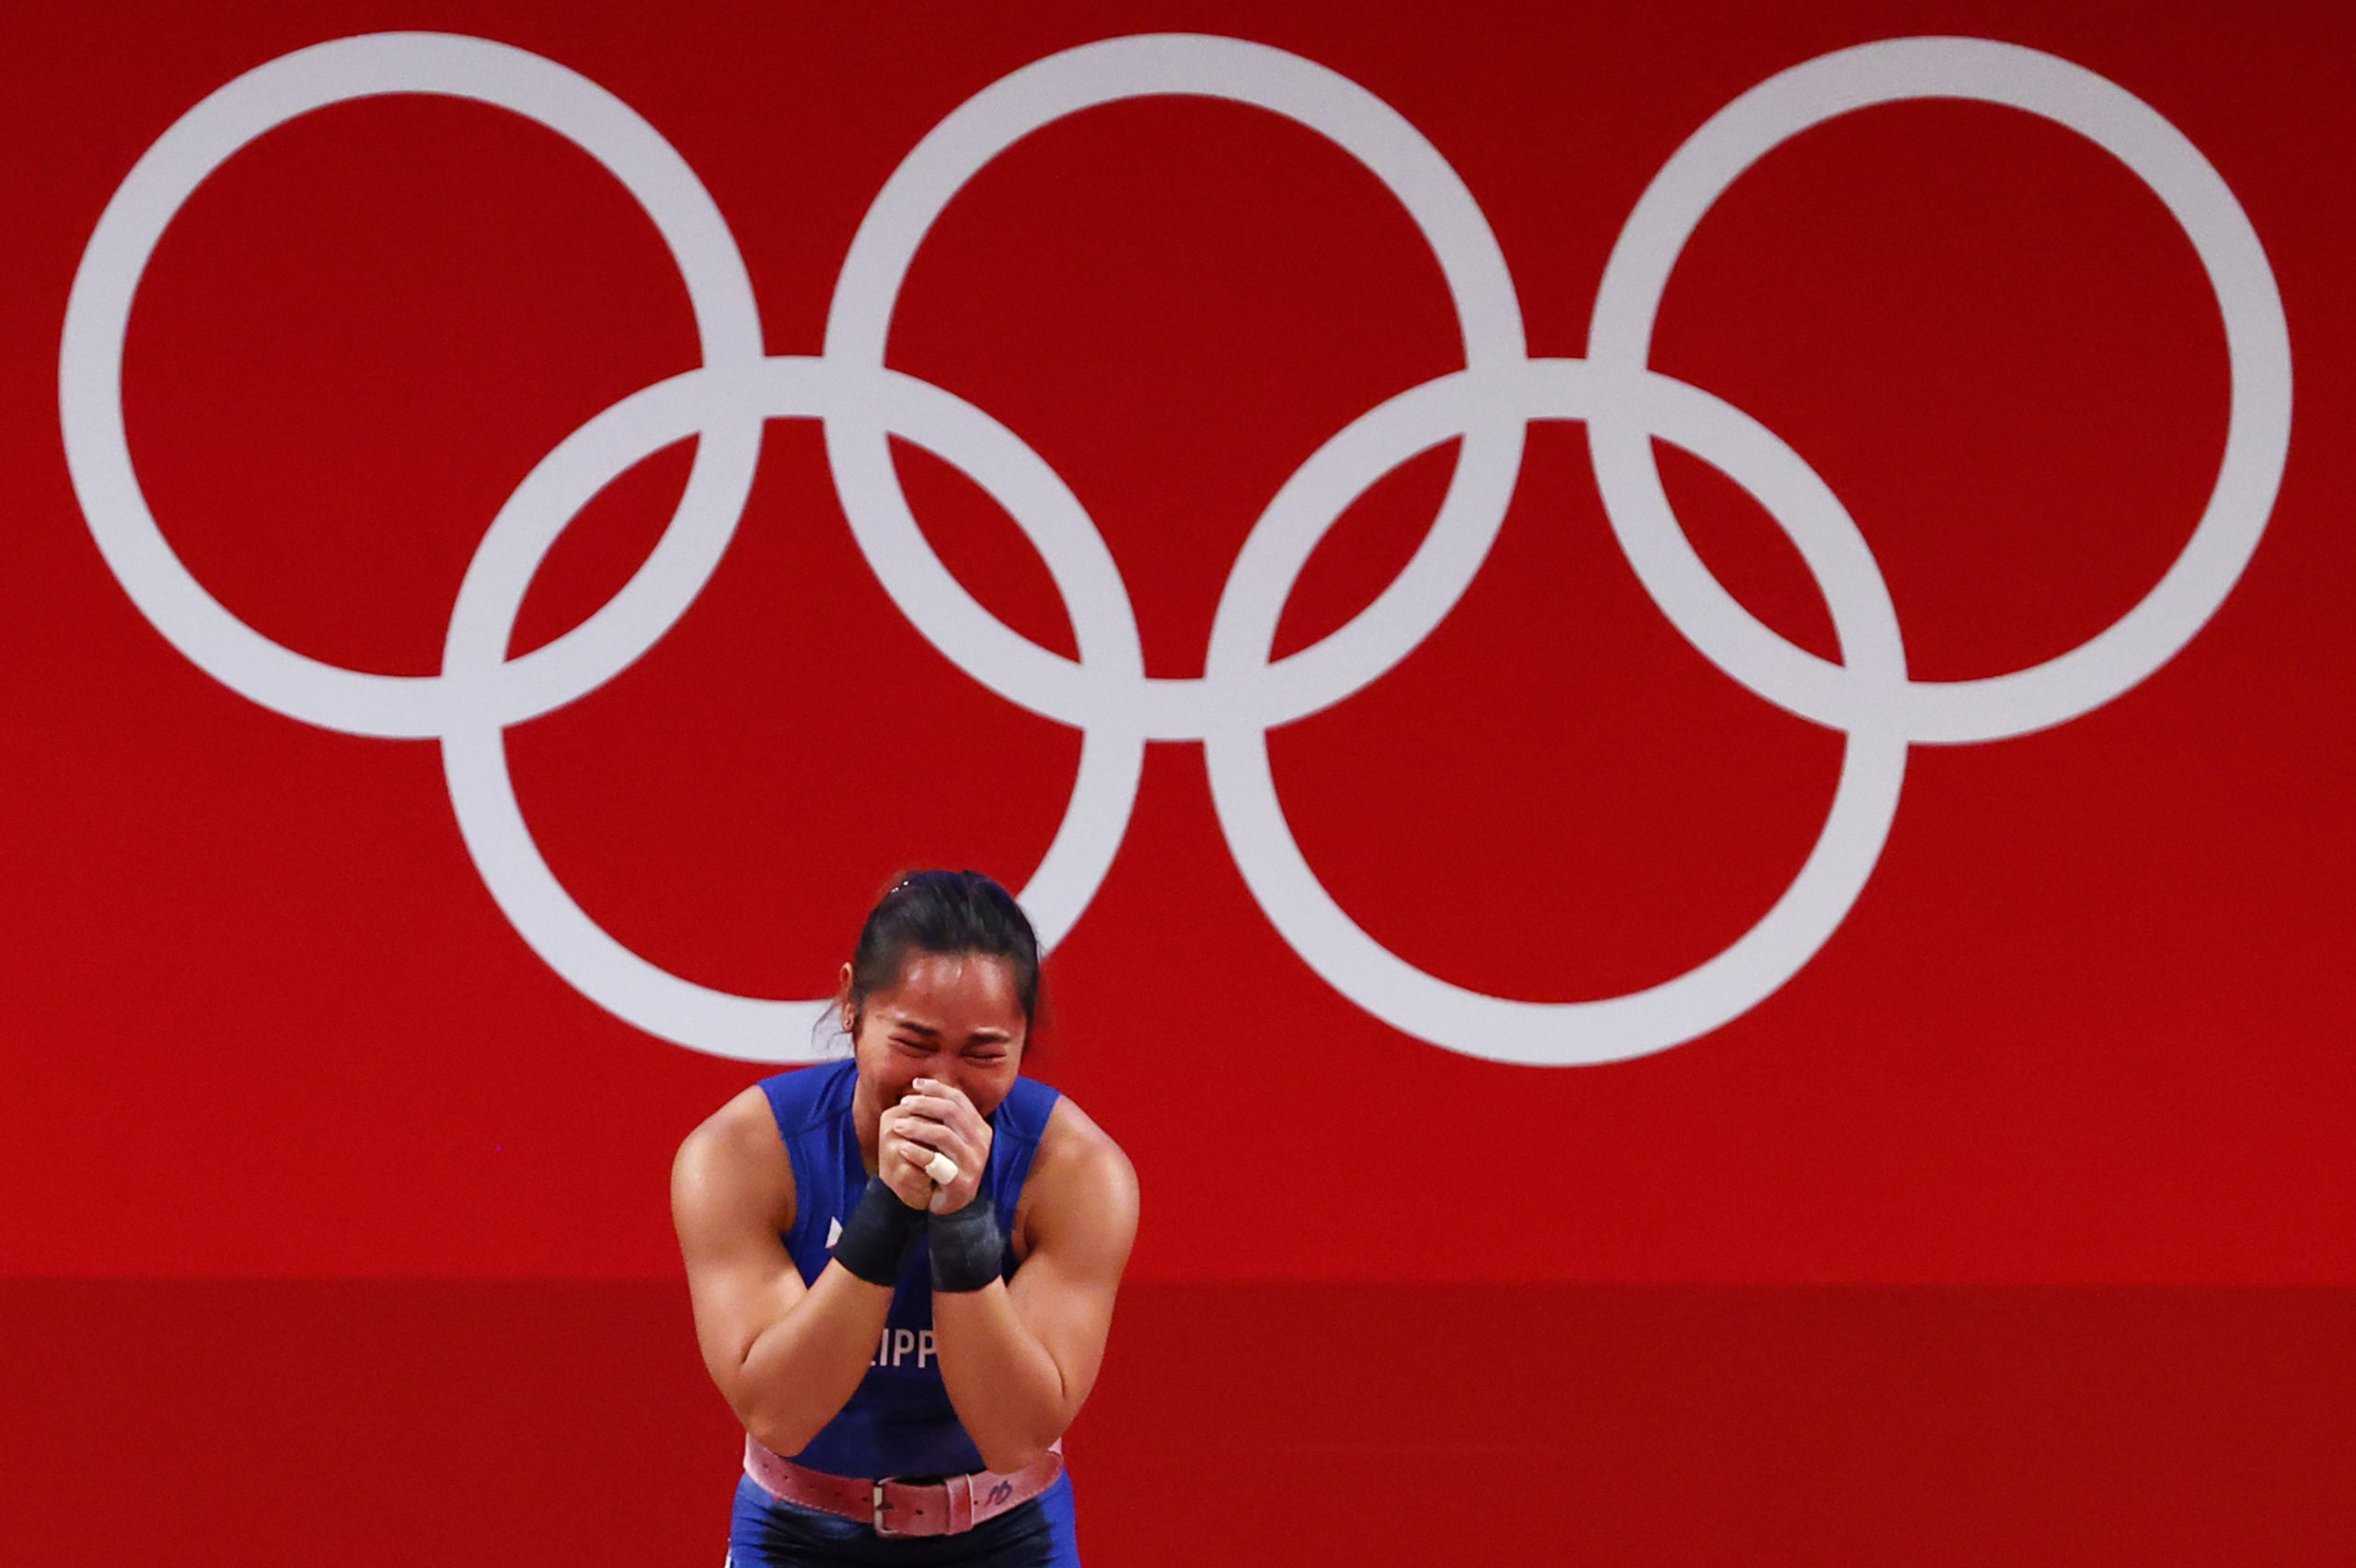 Hidilyn diaz tokyo Olympics gold philippines weightlifting